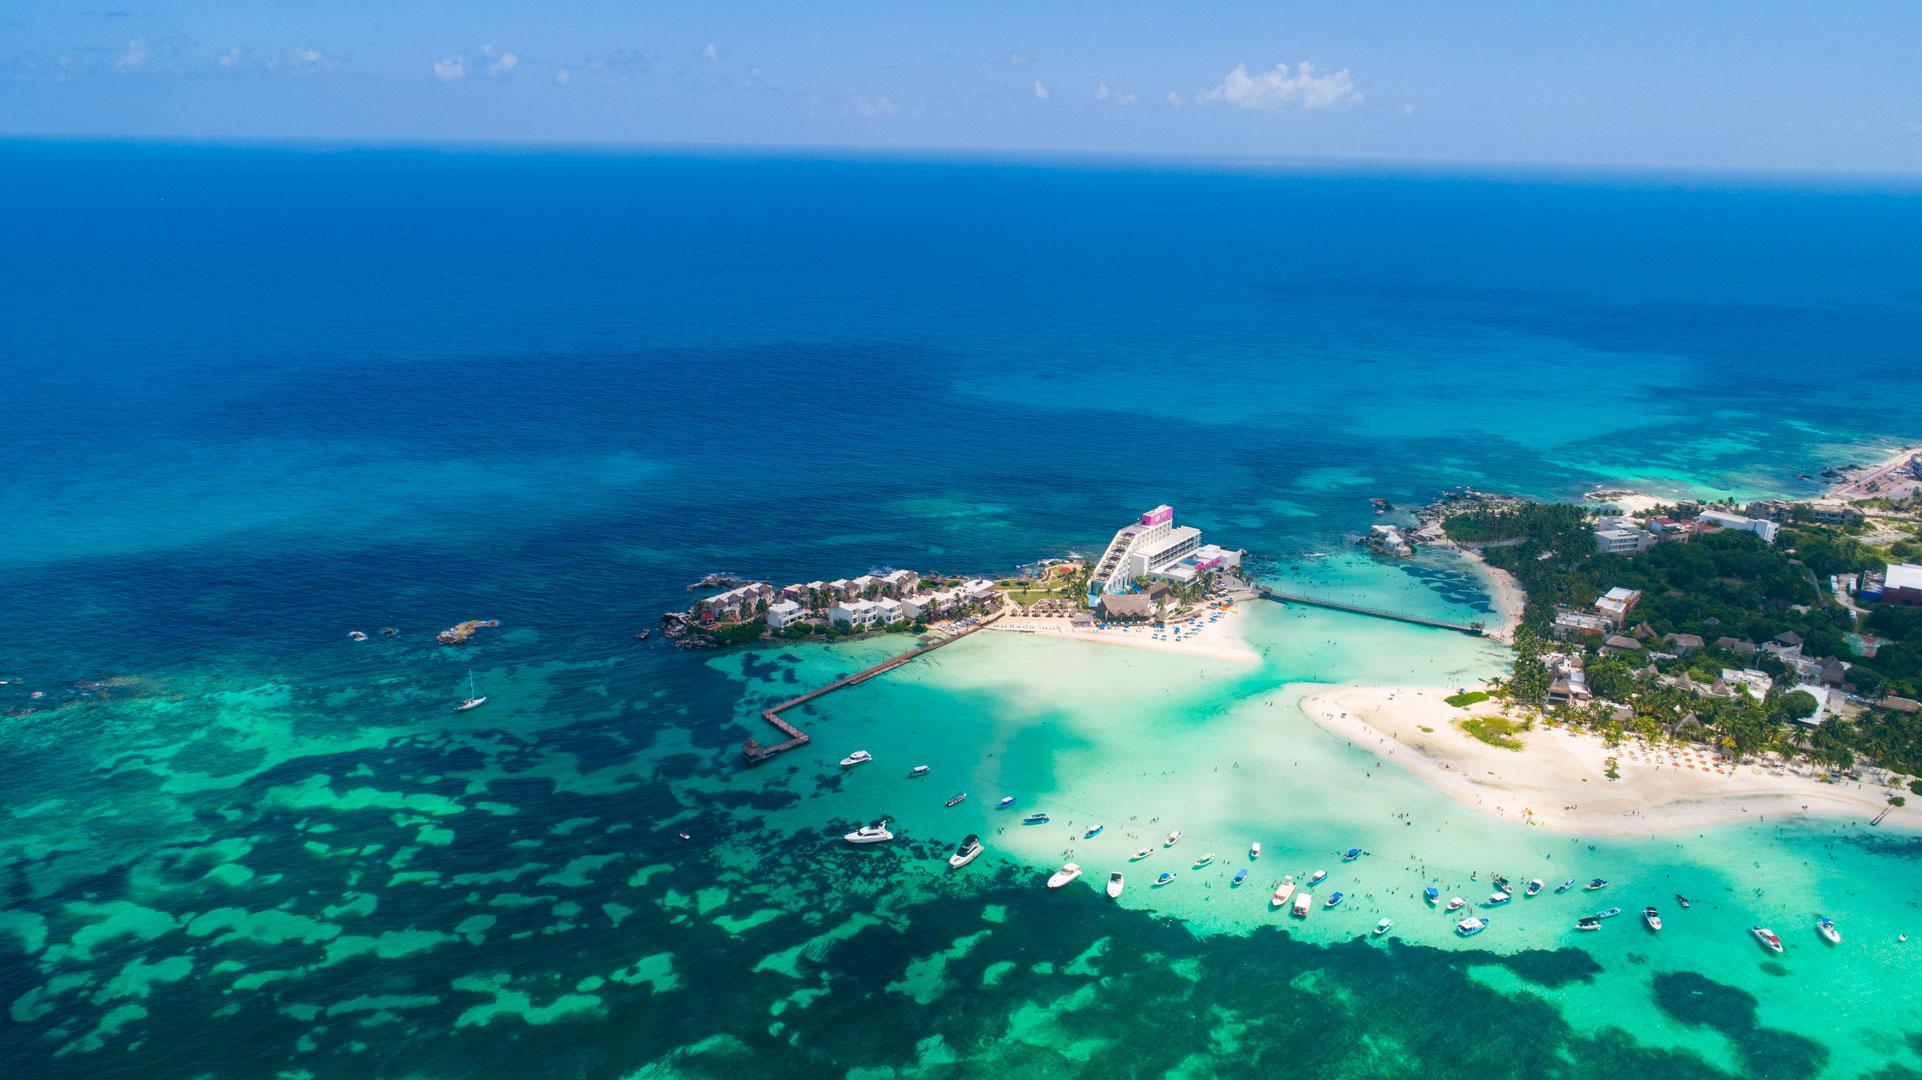 Playa Norte in Isla Mujeres, is the BEST BEACH of Mexico, by TripAdvisor.